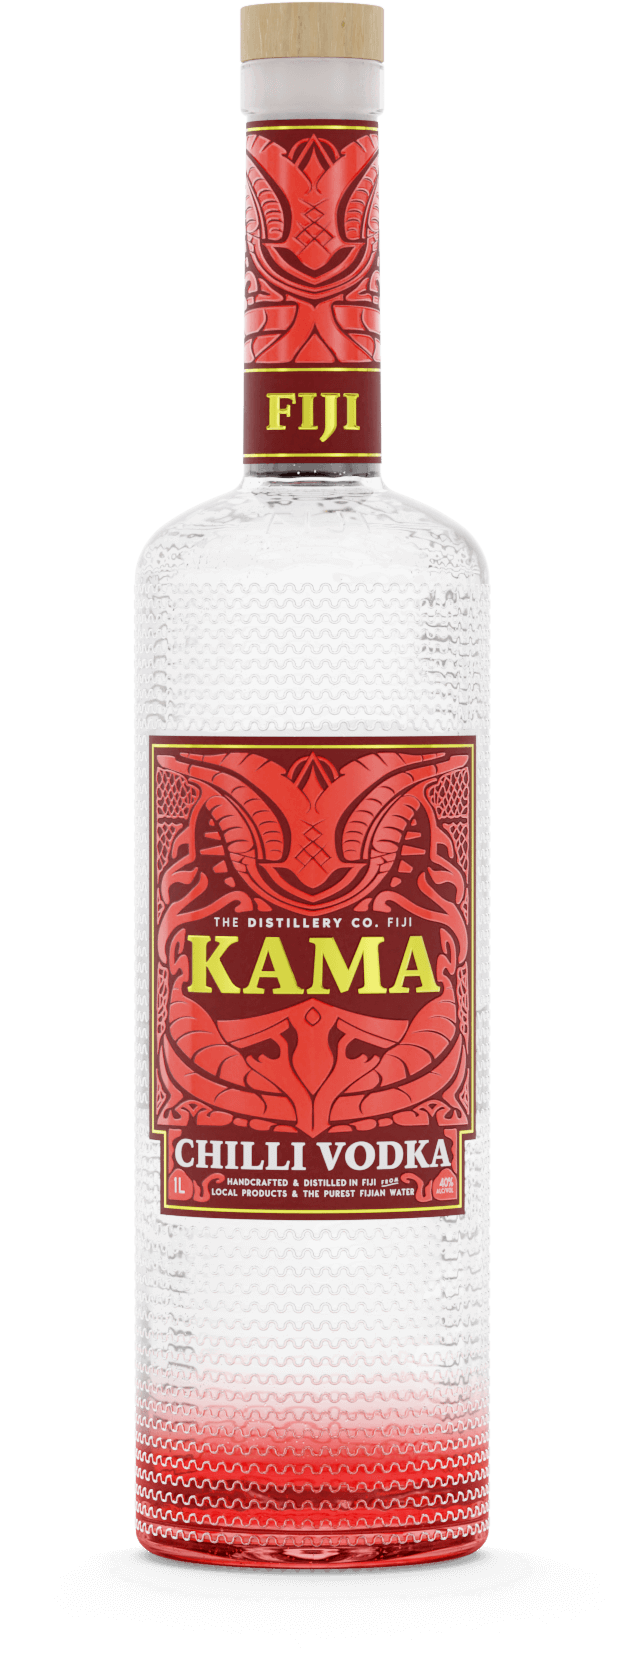 Kama Chilli Vodka Fiji The Distilllery Co Fiji 9957